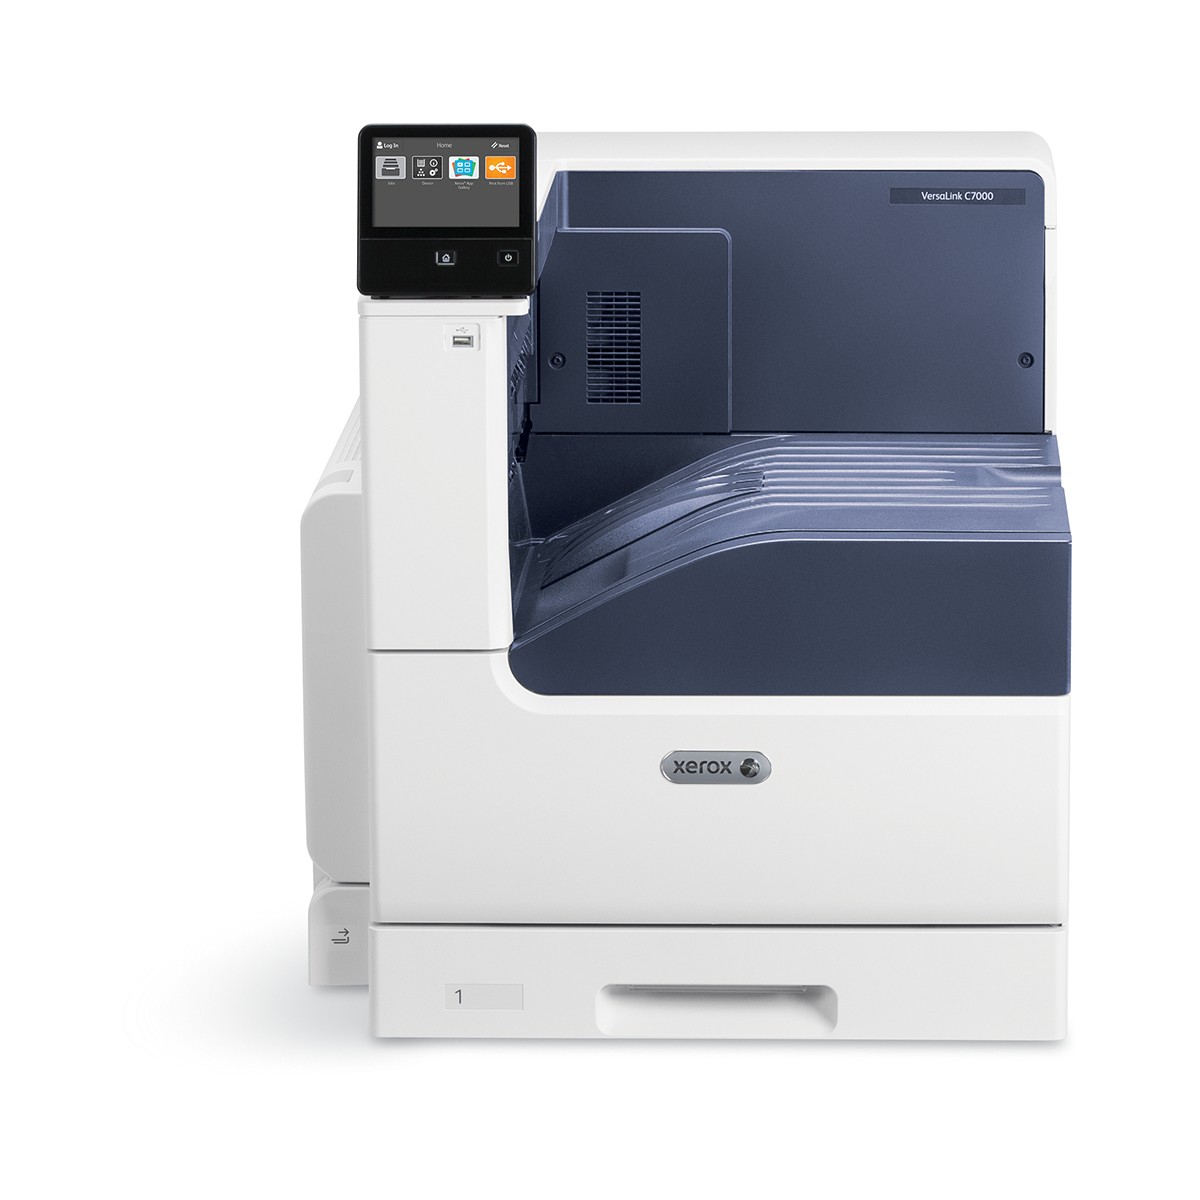 VersaLink C7000 C7000V/N Desktop Laser Printer - Colour - 35 ppm Mono / 35 ppm Color - 1200 x 2400 dpi Print - 620 Sheets Input